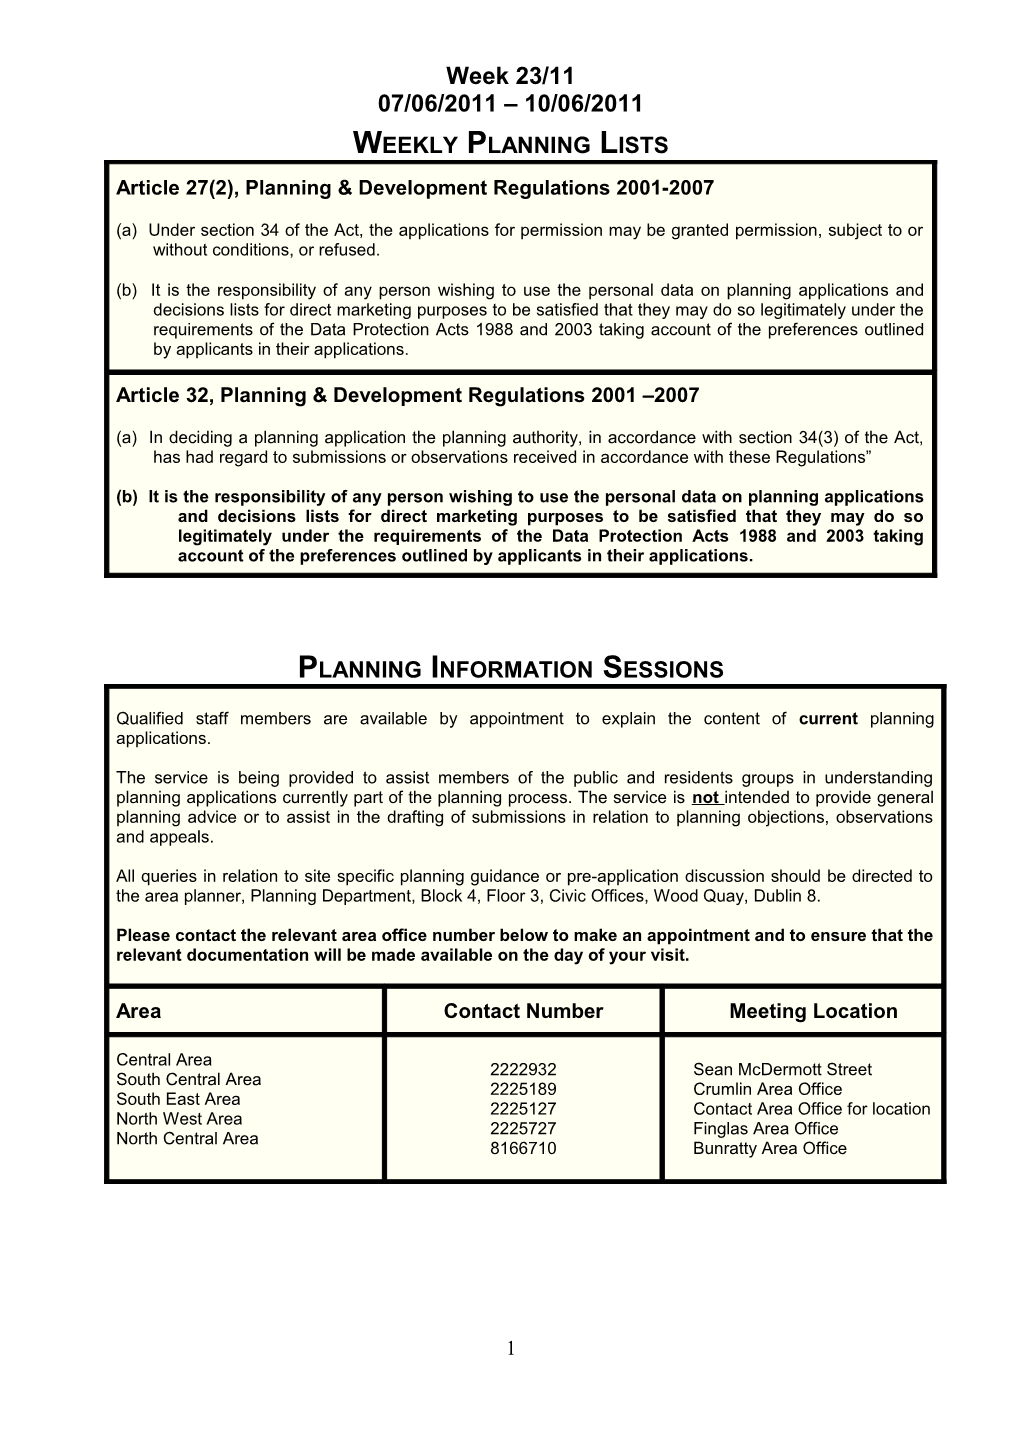 Article 27(2), Planning & Development Regulations 2001-2007 s4